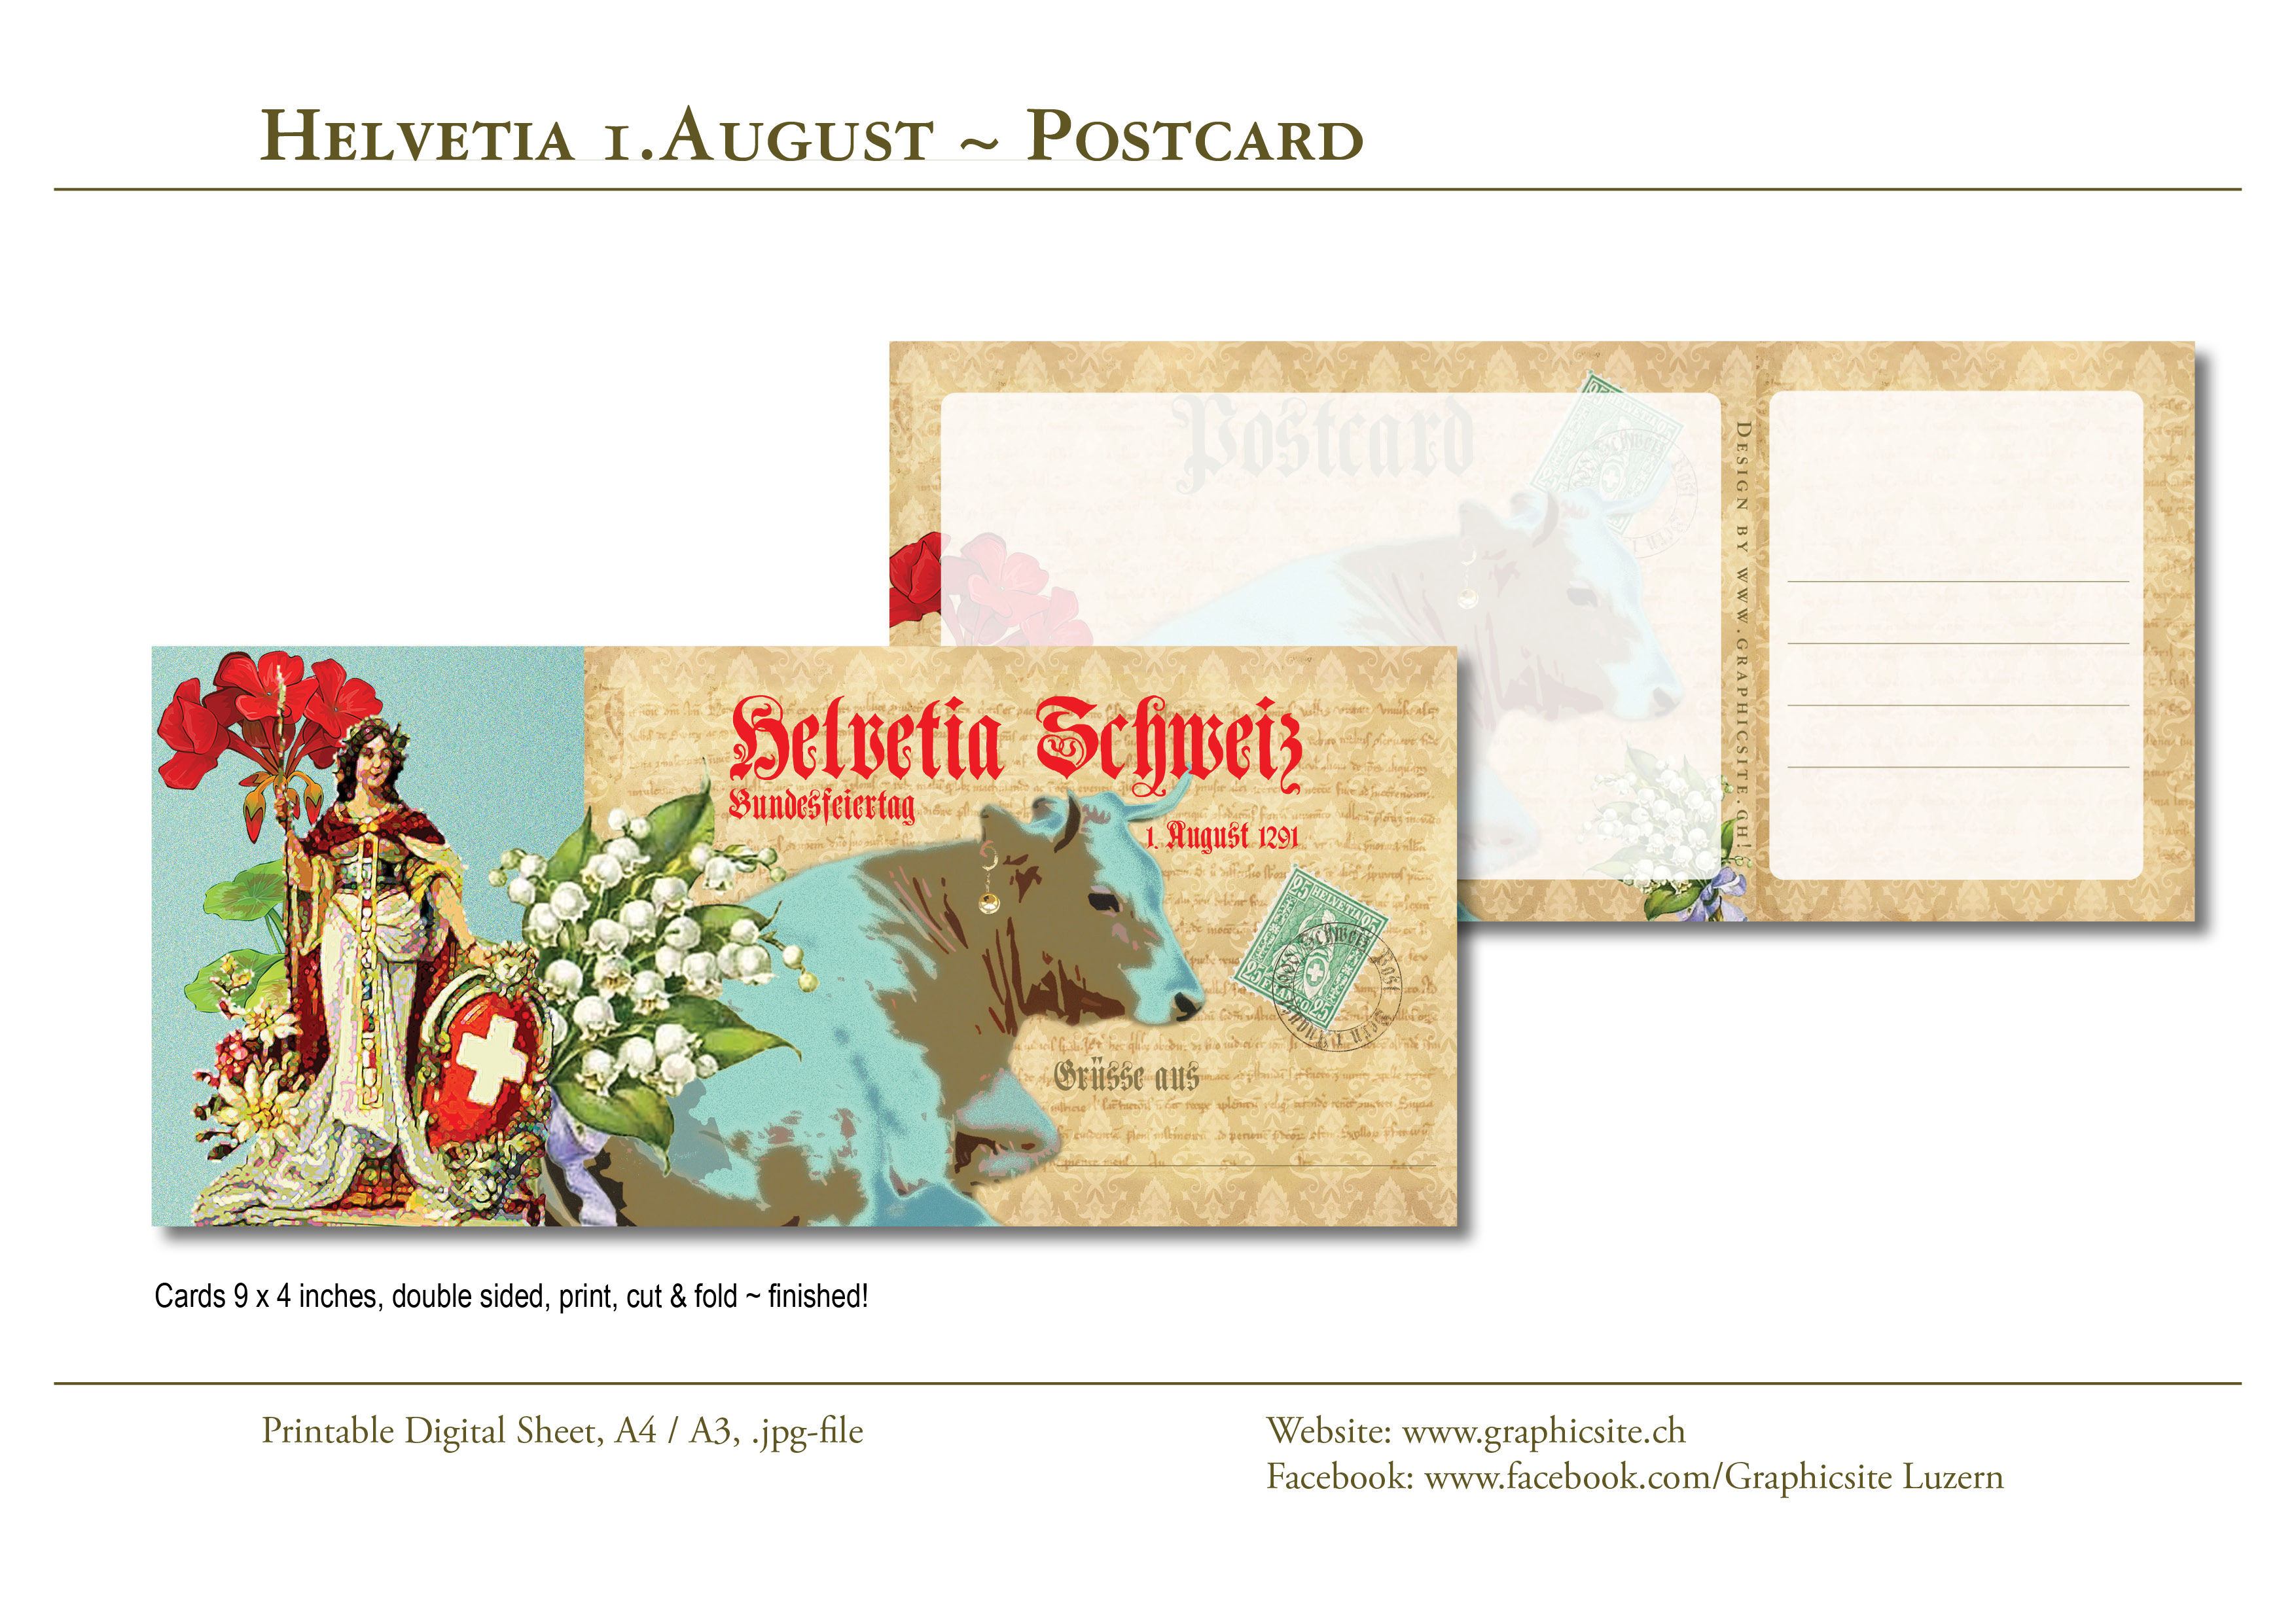 Printable Digital Sheets - Cards - Helvetia 1. August - celebration, national, swiss, switzerland, birthday, graphic design, luzern, graphics, digital, art,